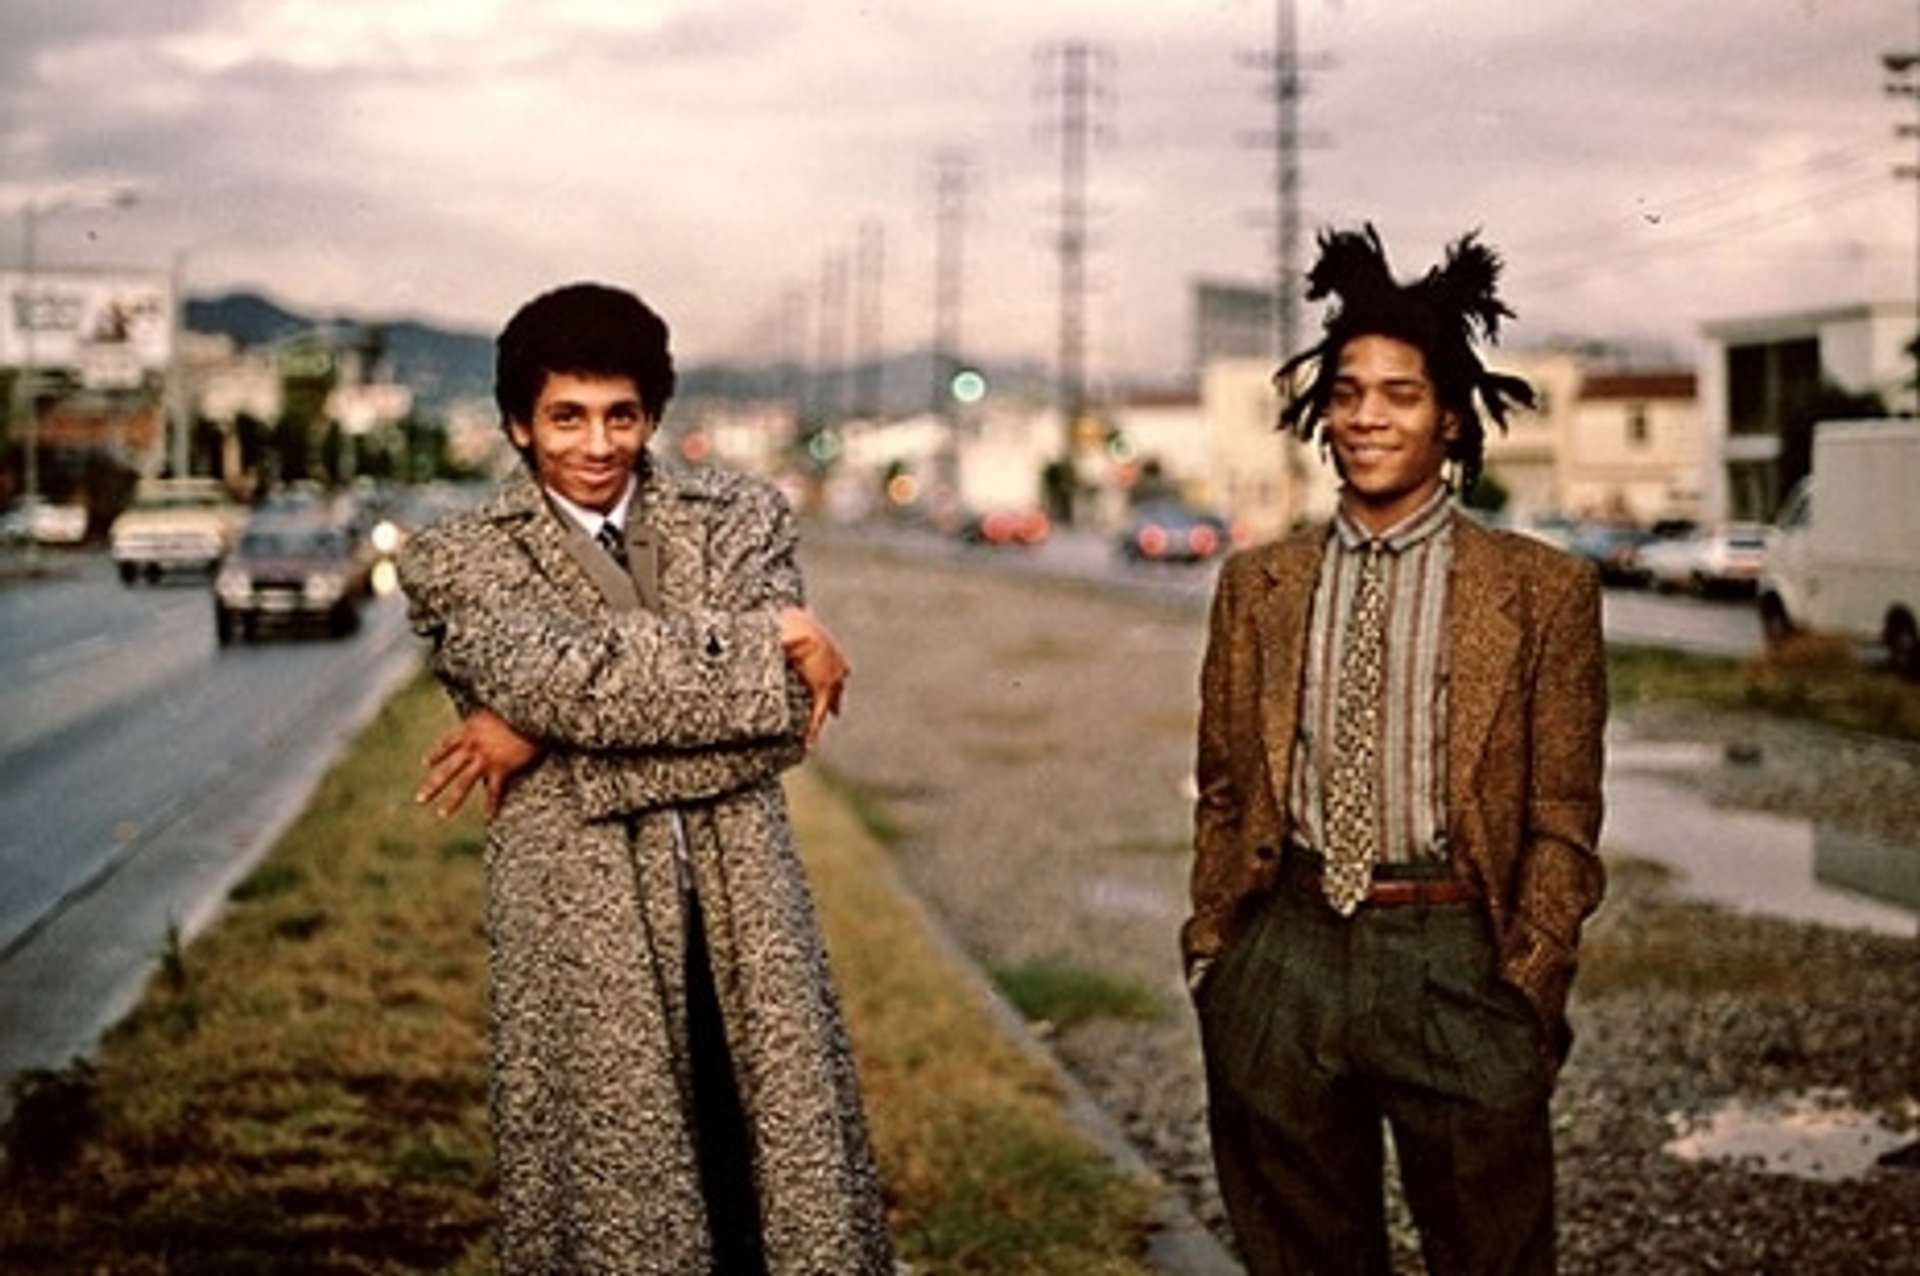 A photograph of artists Rammellzee and Jean-Michel Basquiat standing outside.